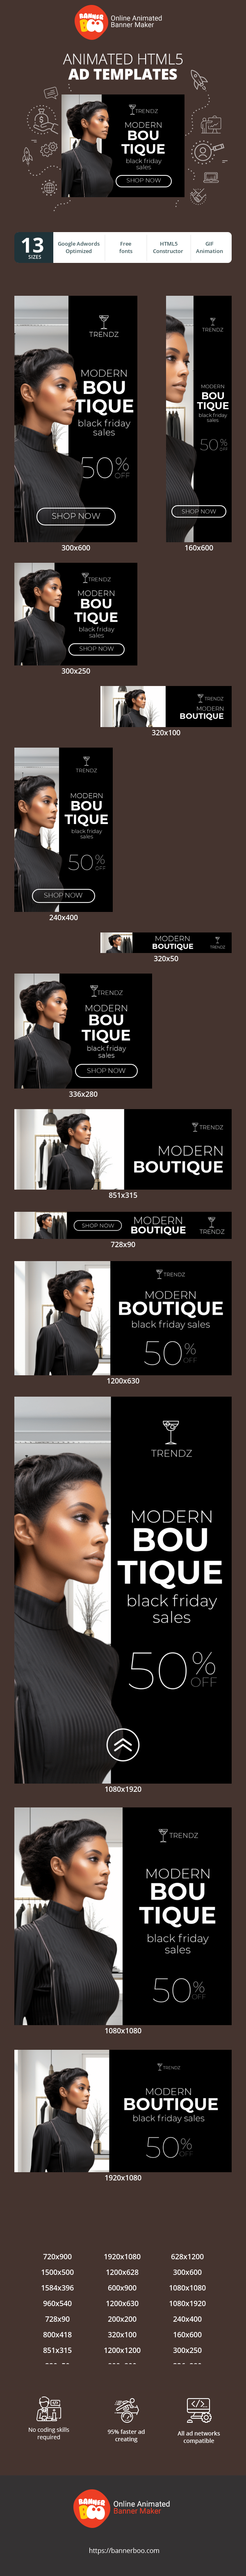 Шаблон рекламного банера — Modern Boutique — Black Friday Sales